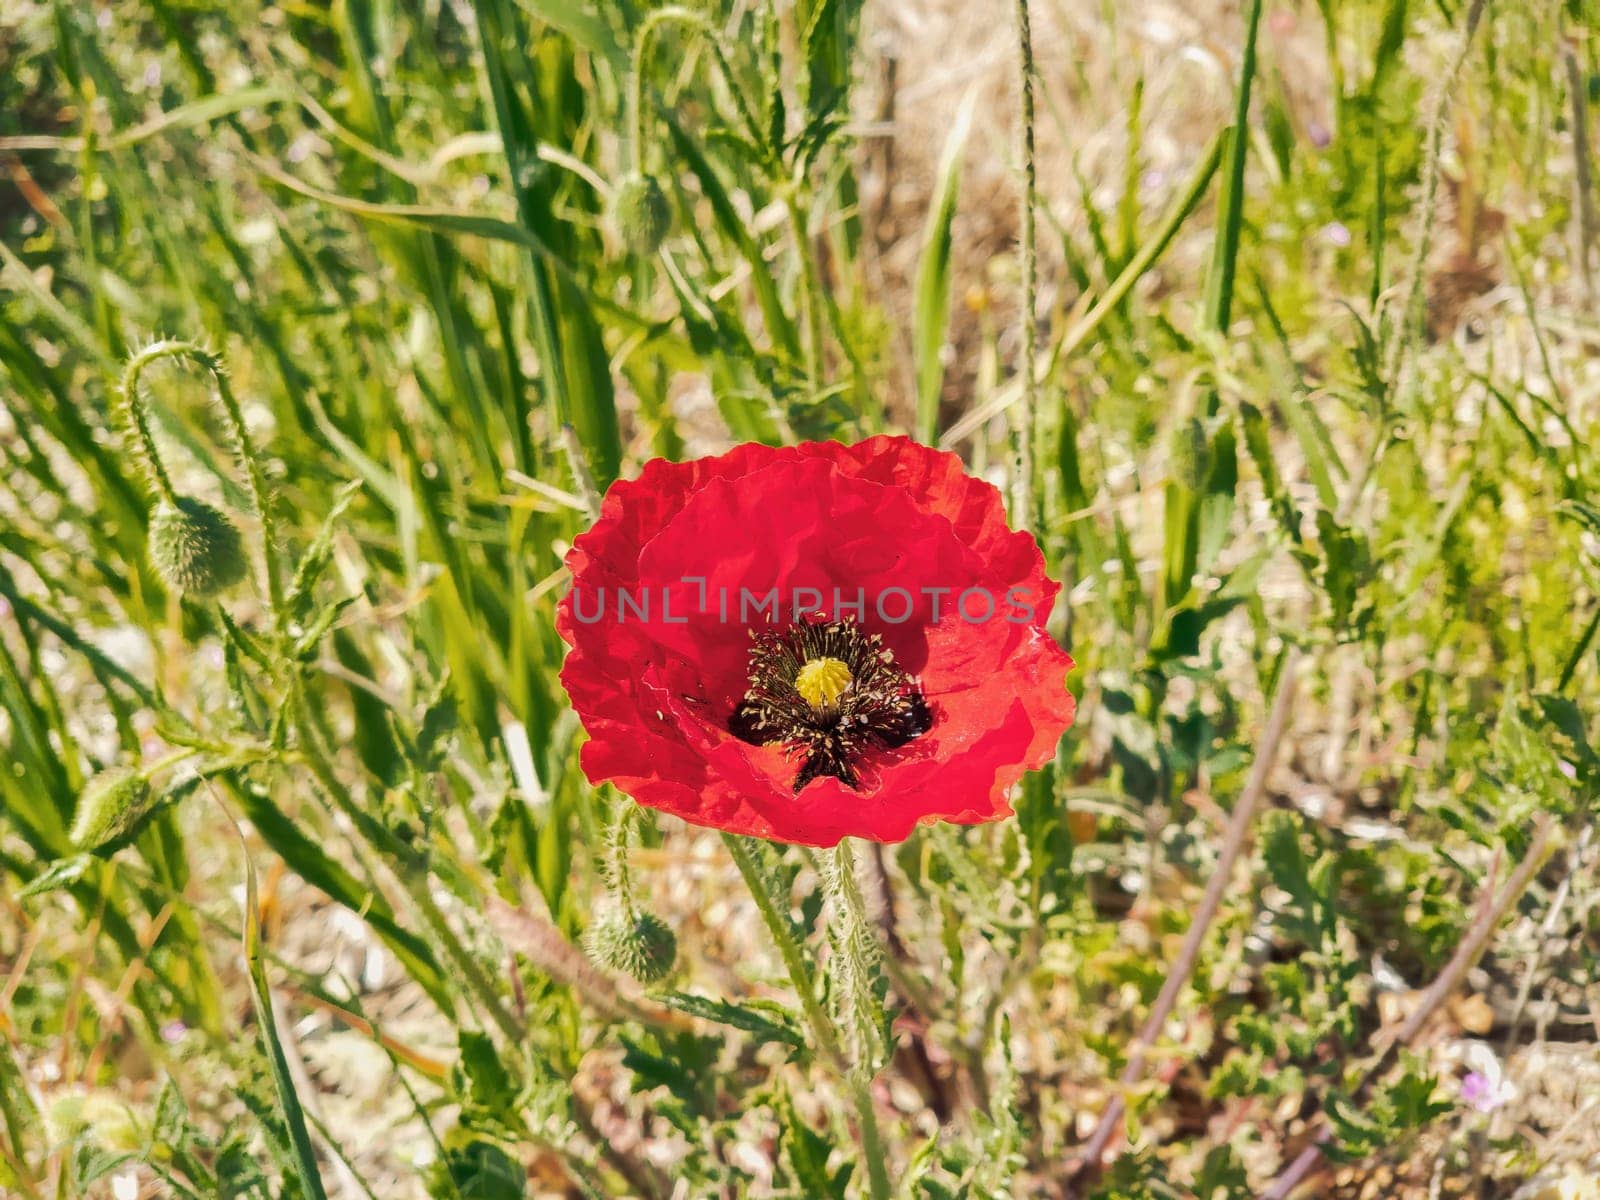 Red poppy flower on a field against green vegetation background.